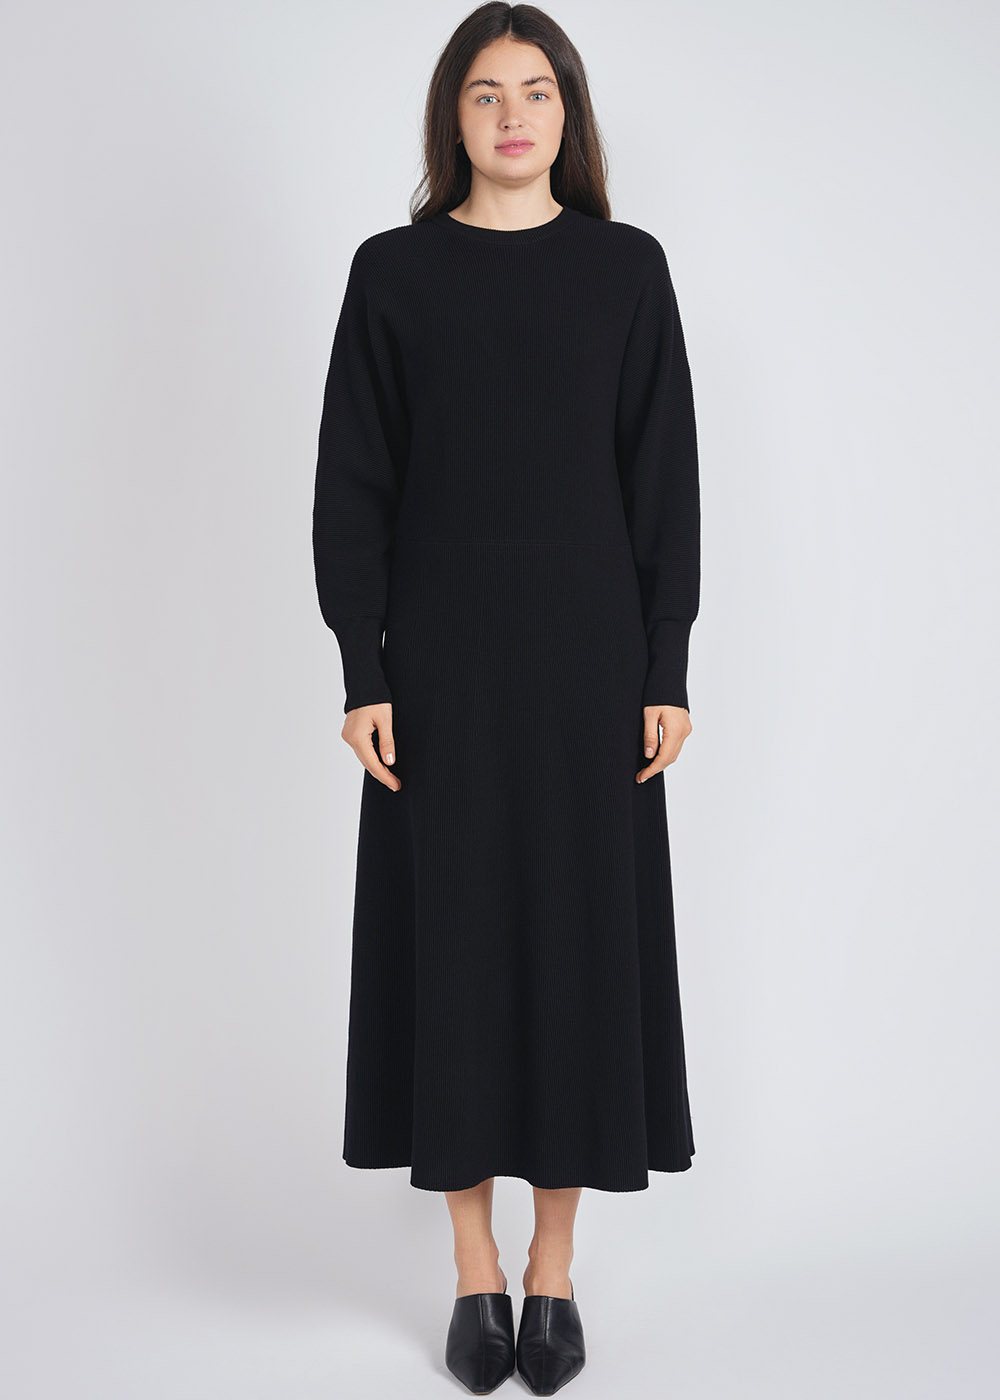 Sleek Black Dress in Ribbed Knit Design